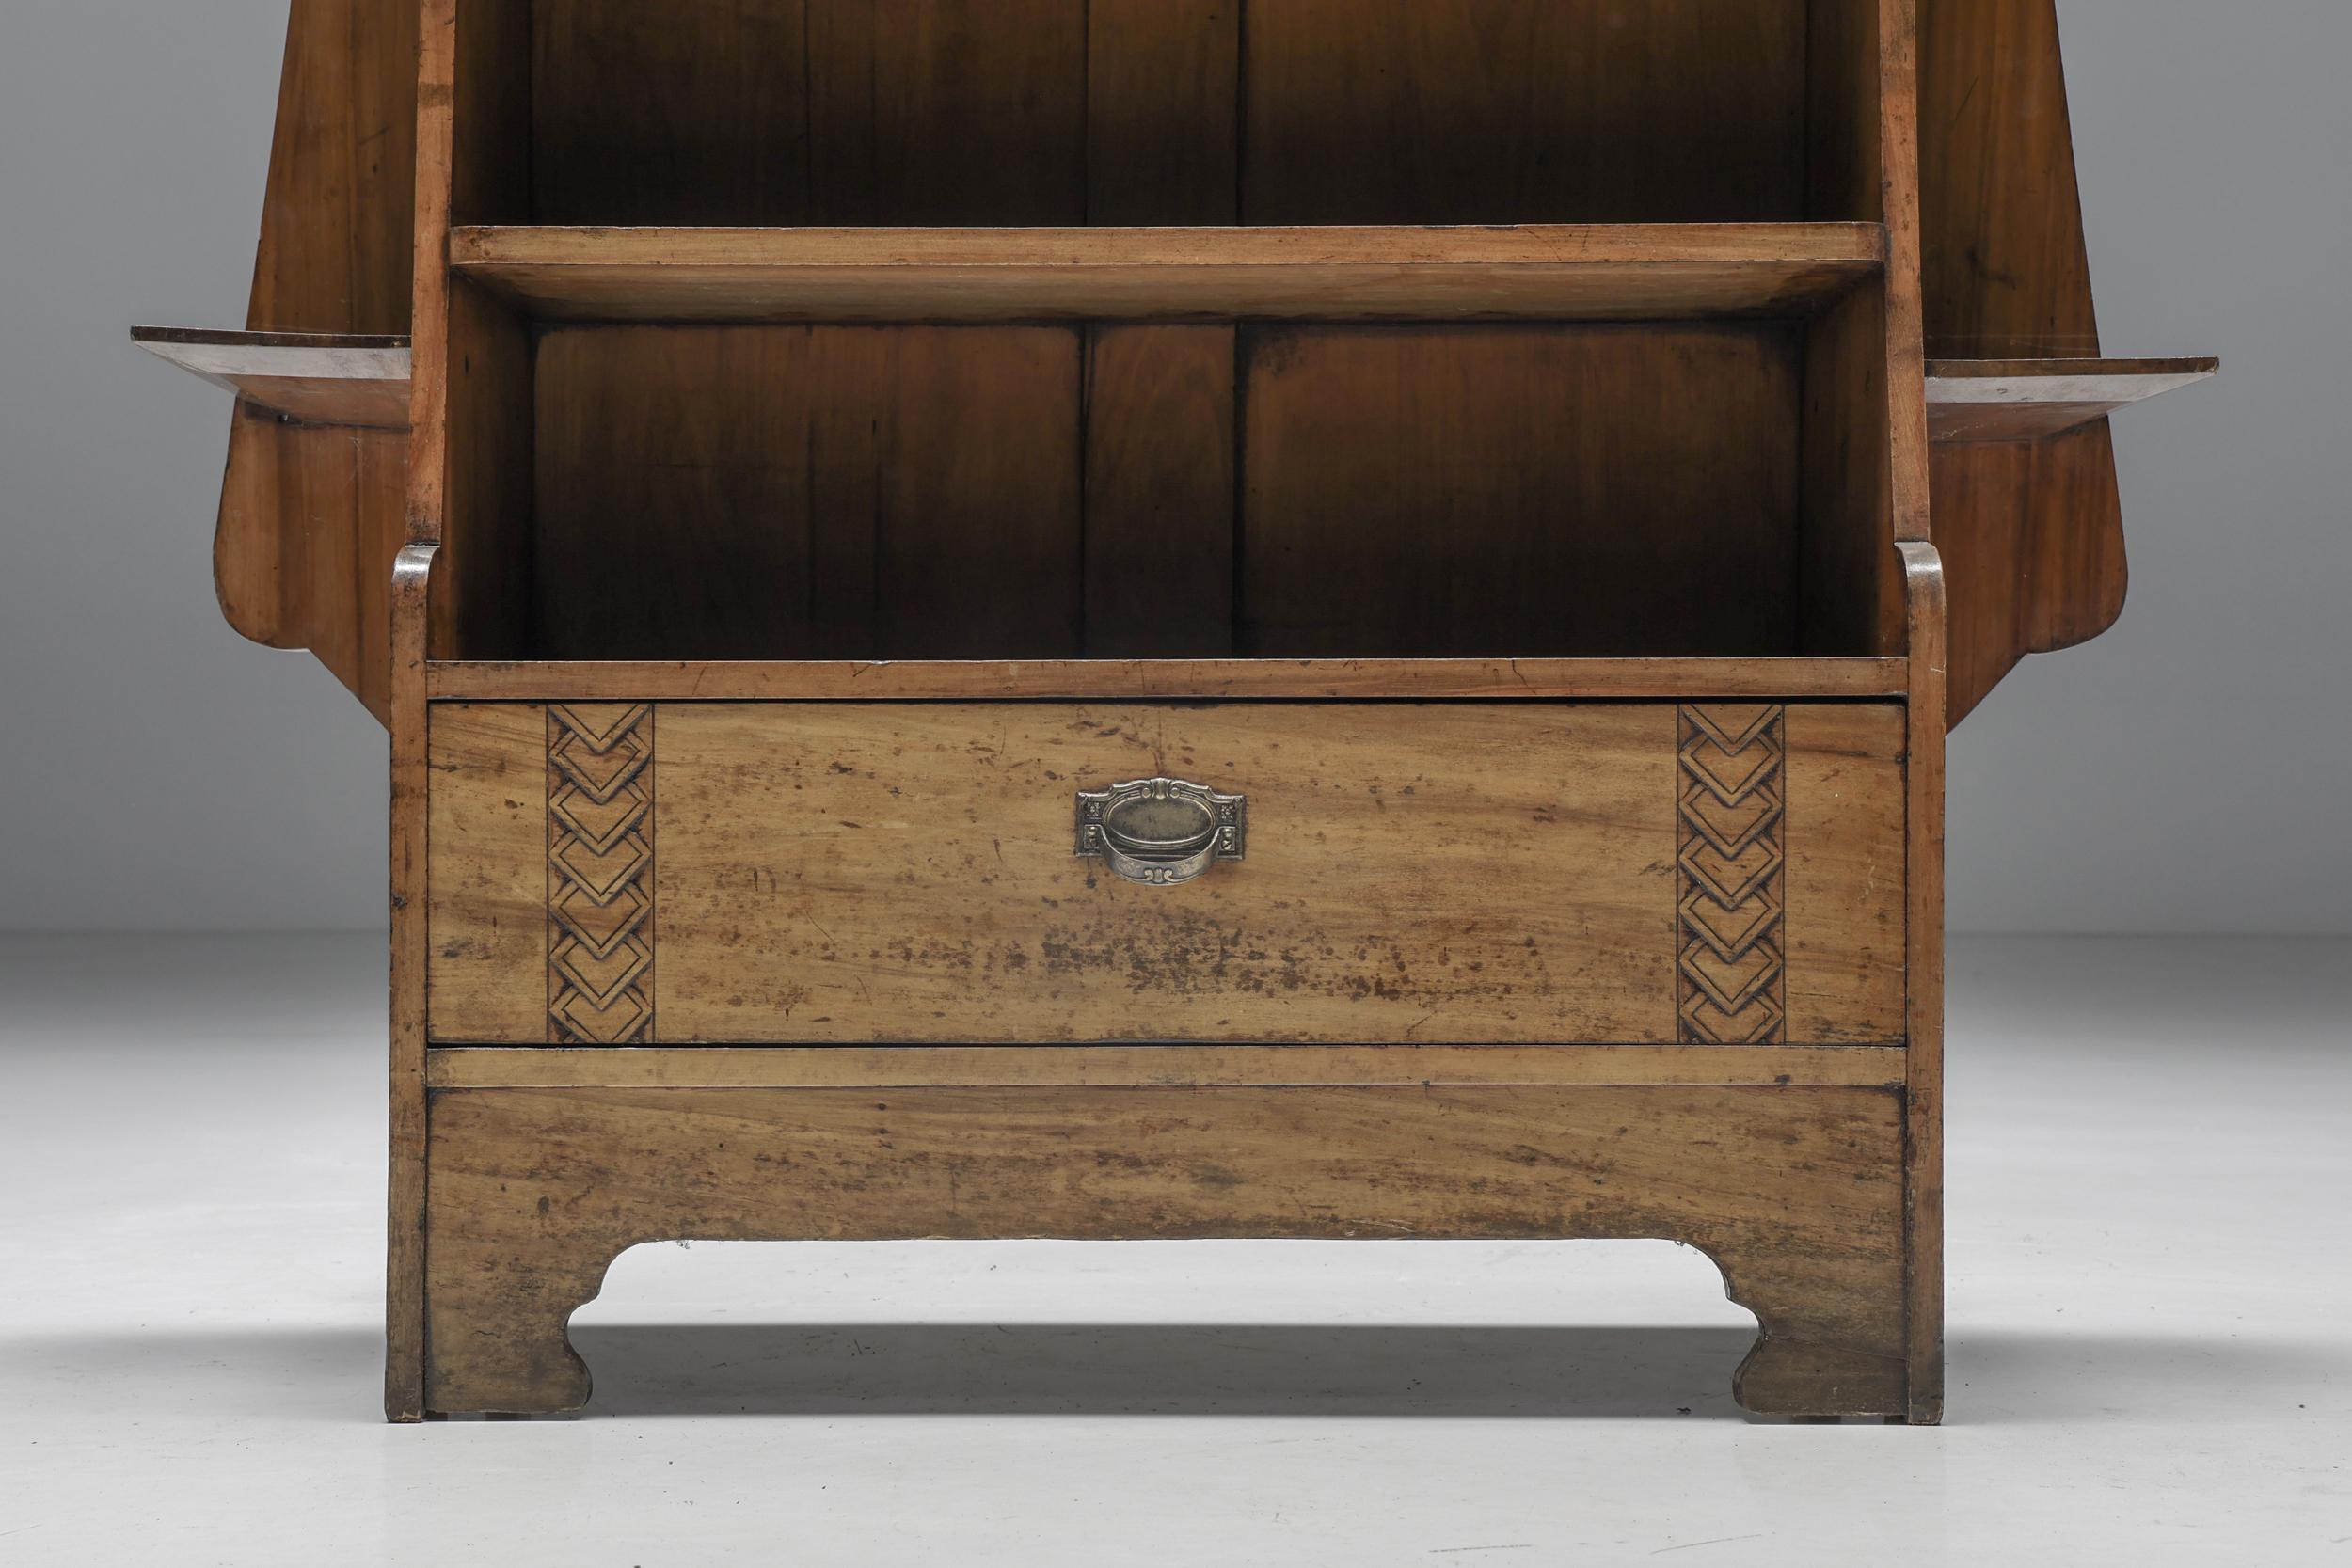 Scottish Arts & Crafts Cupboard in Wood by Charles Rennie Mackintosh, 20th Century